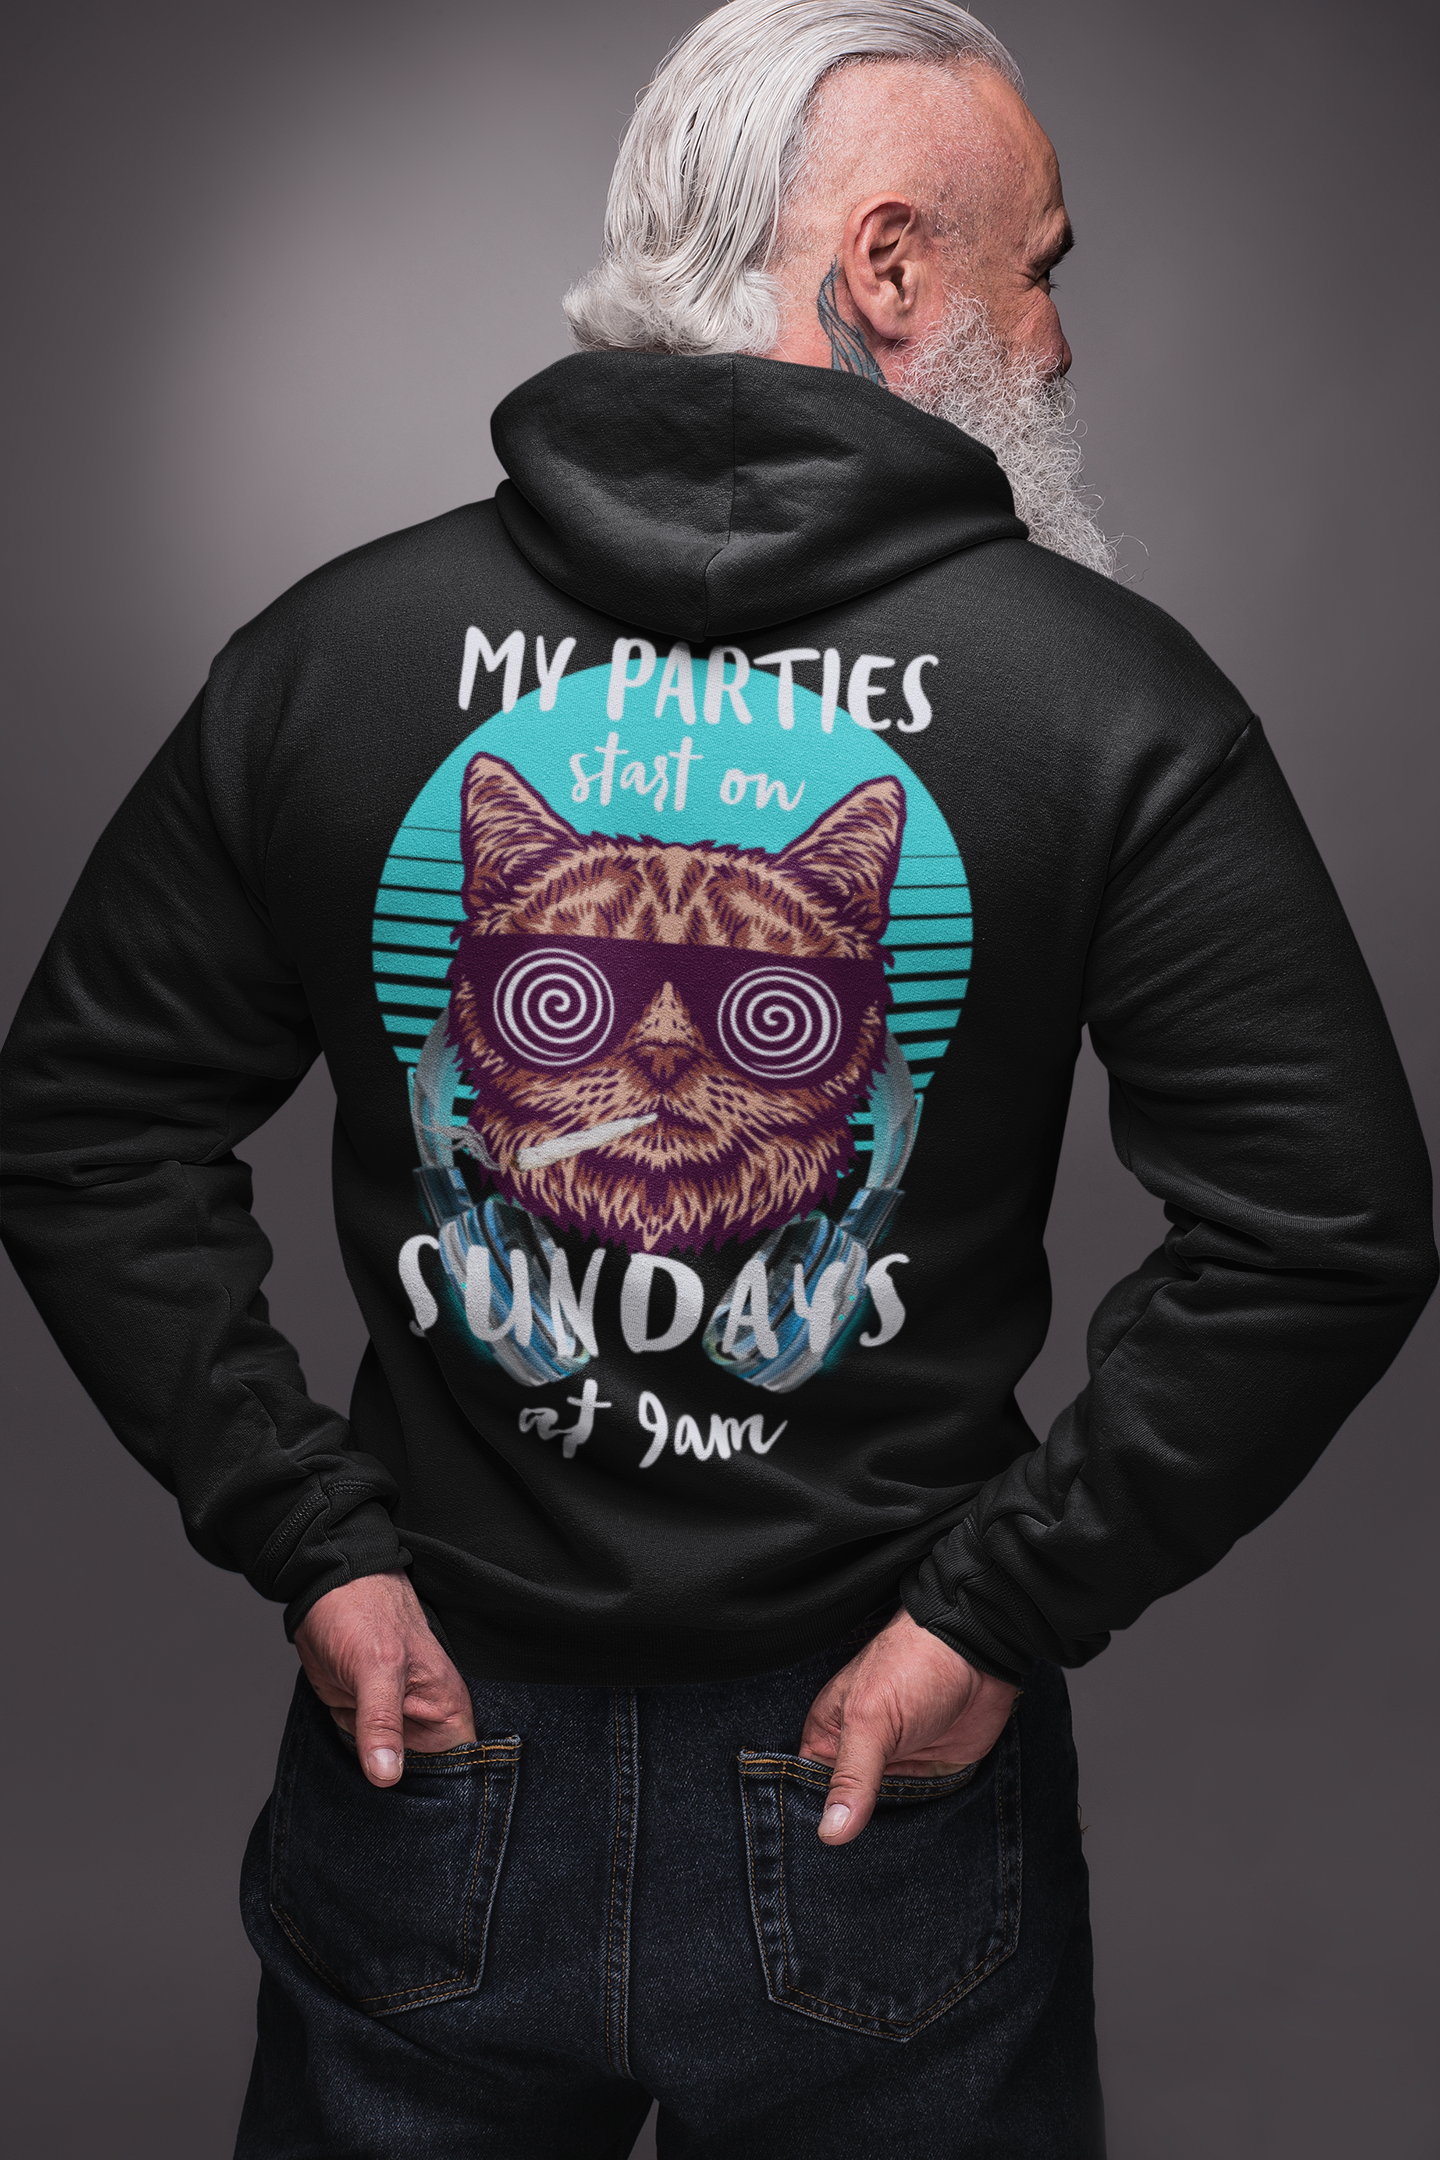 My parties start on Sundays at 9am - Unisex Hoodie - CatsOnDrugs